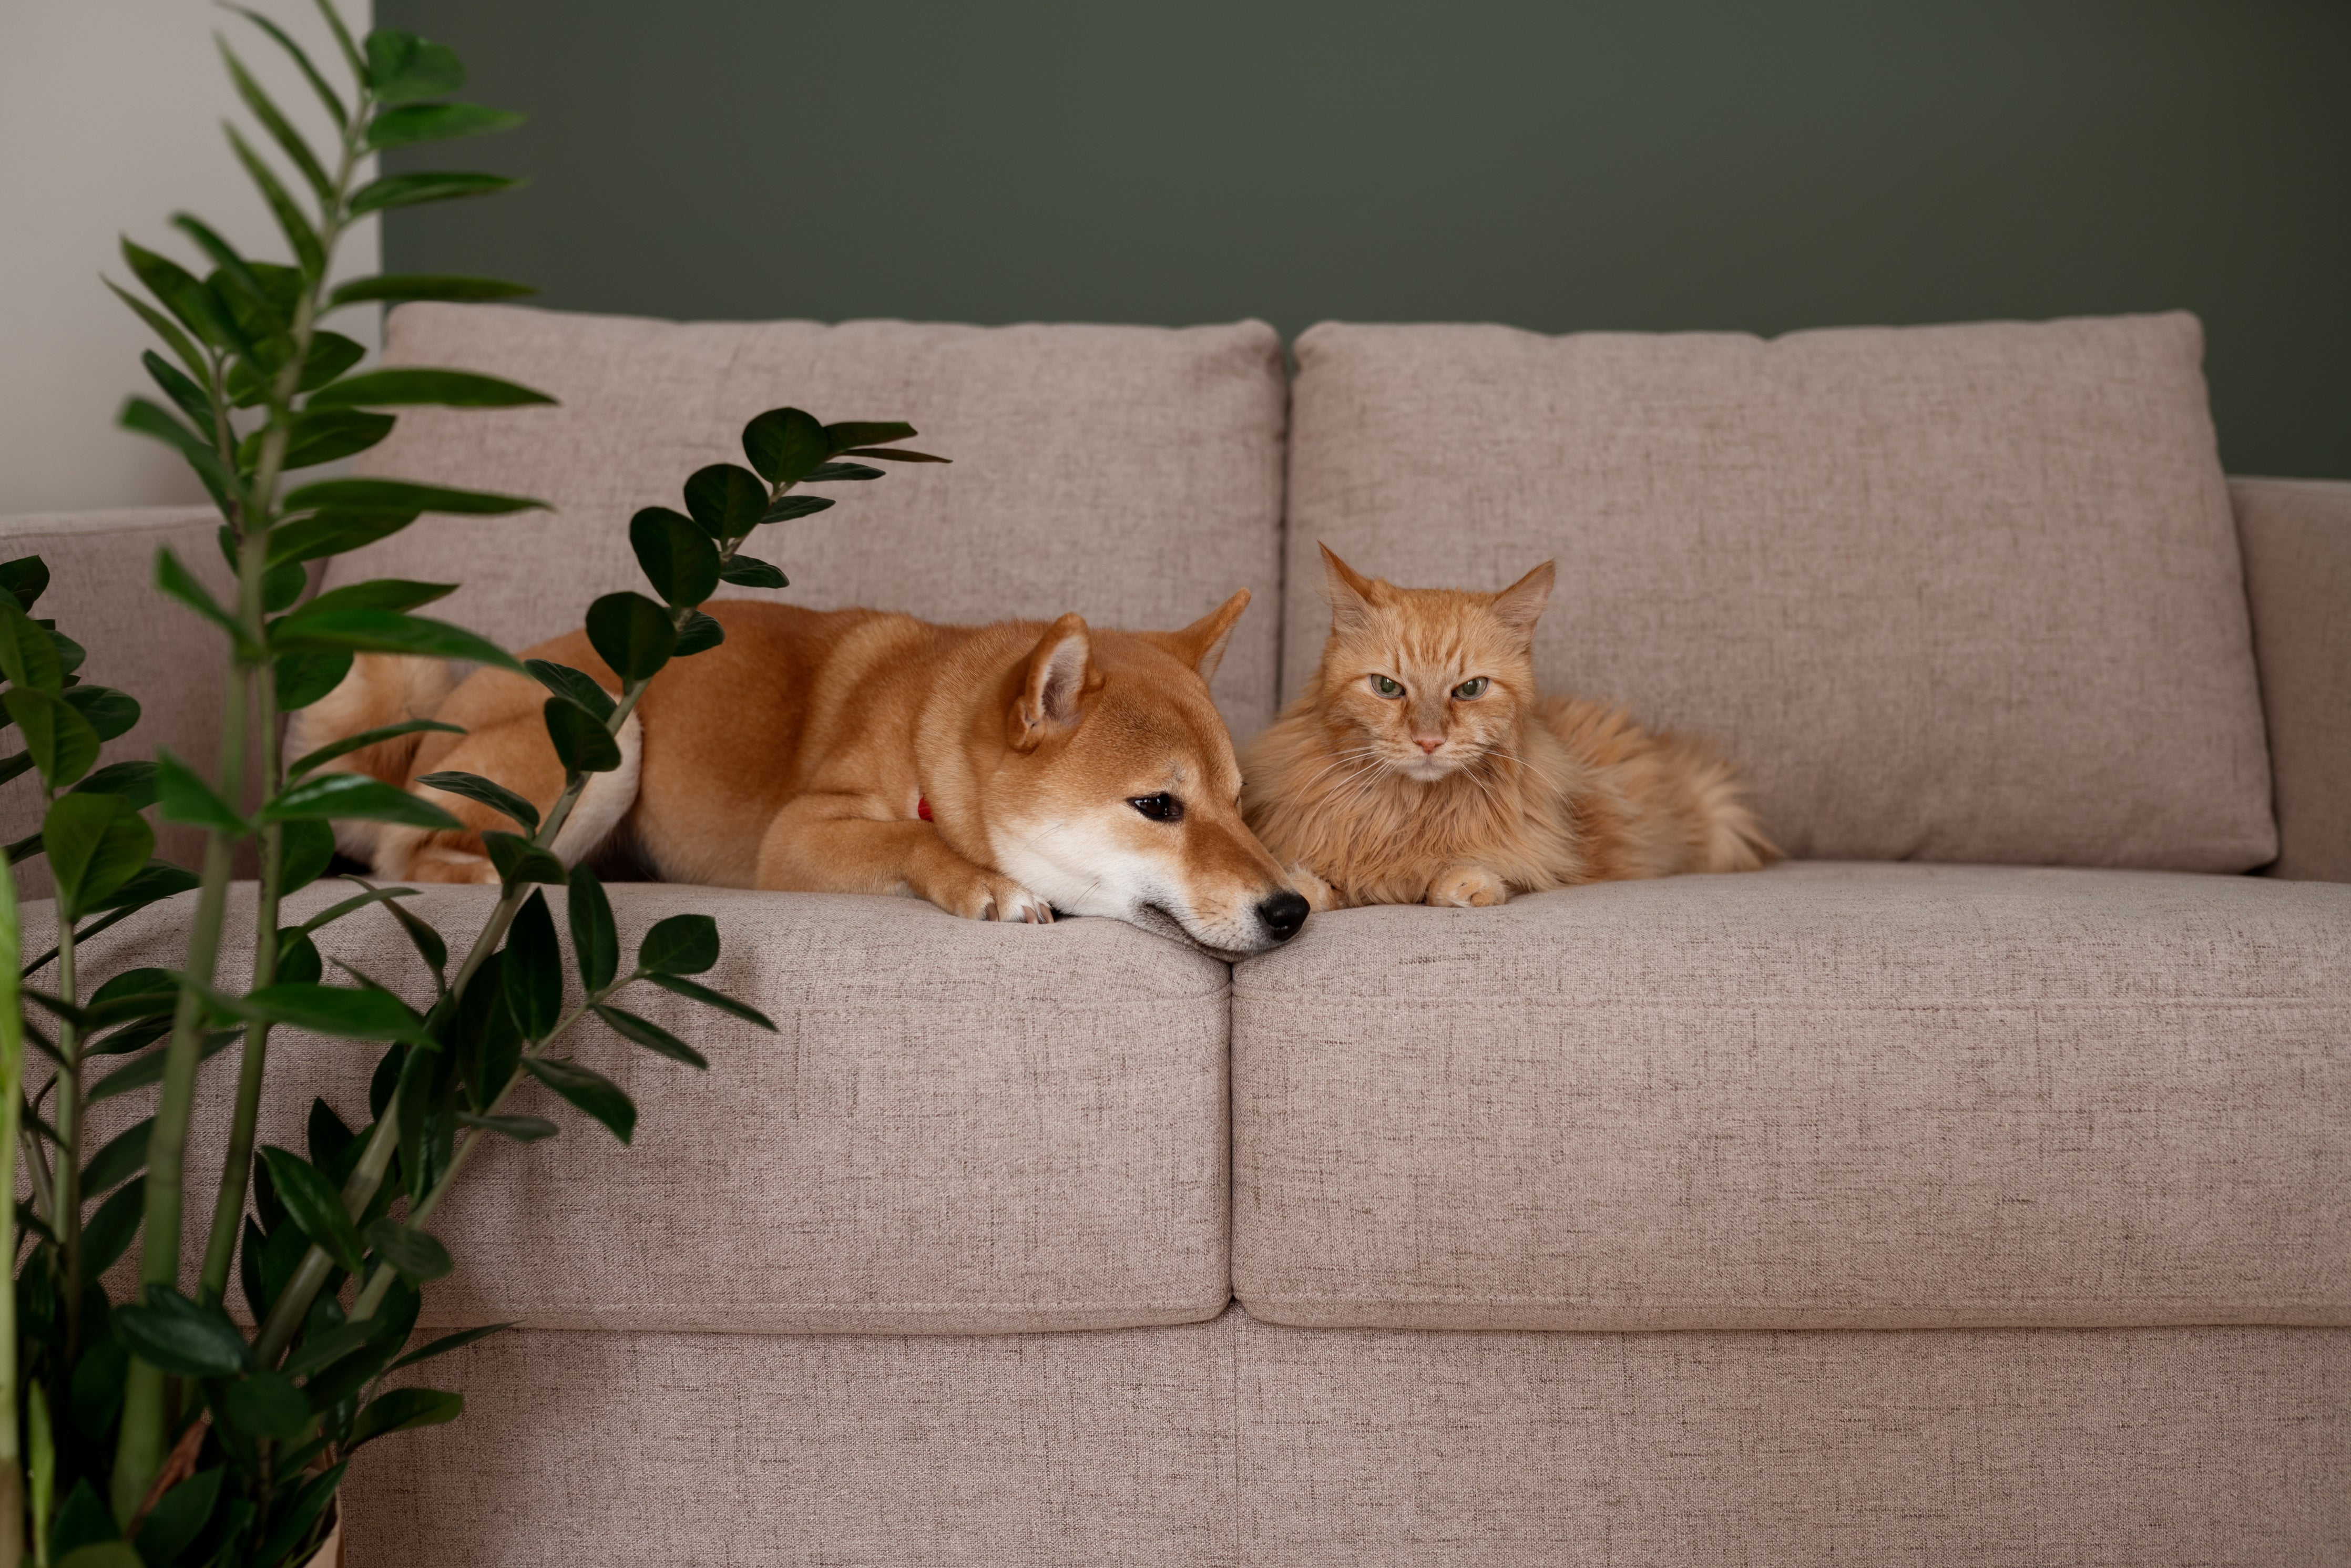 Dog and cat cuddling on sofa next to houseplant